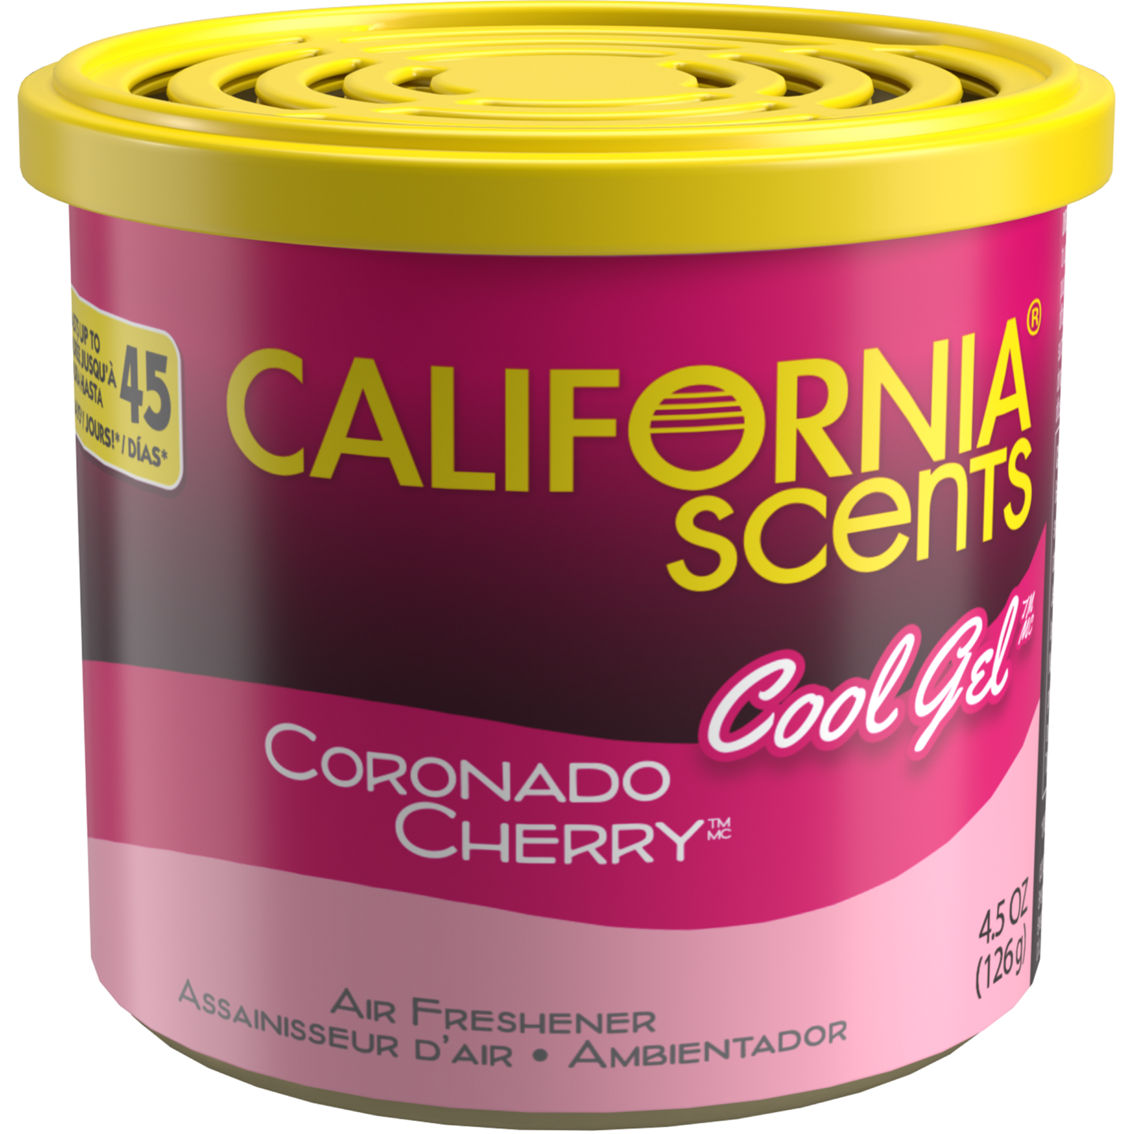 California Scents Spillproof Can Air Freshener, Coronado Cherry